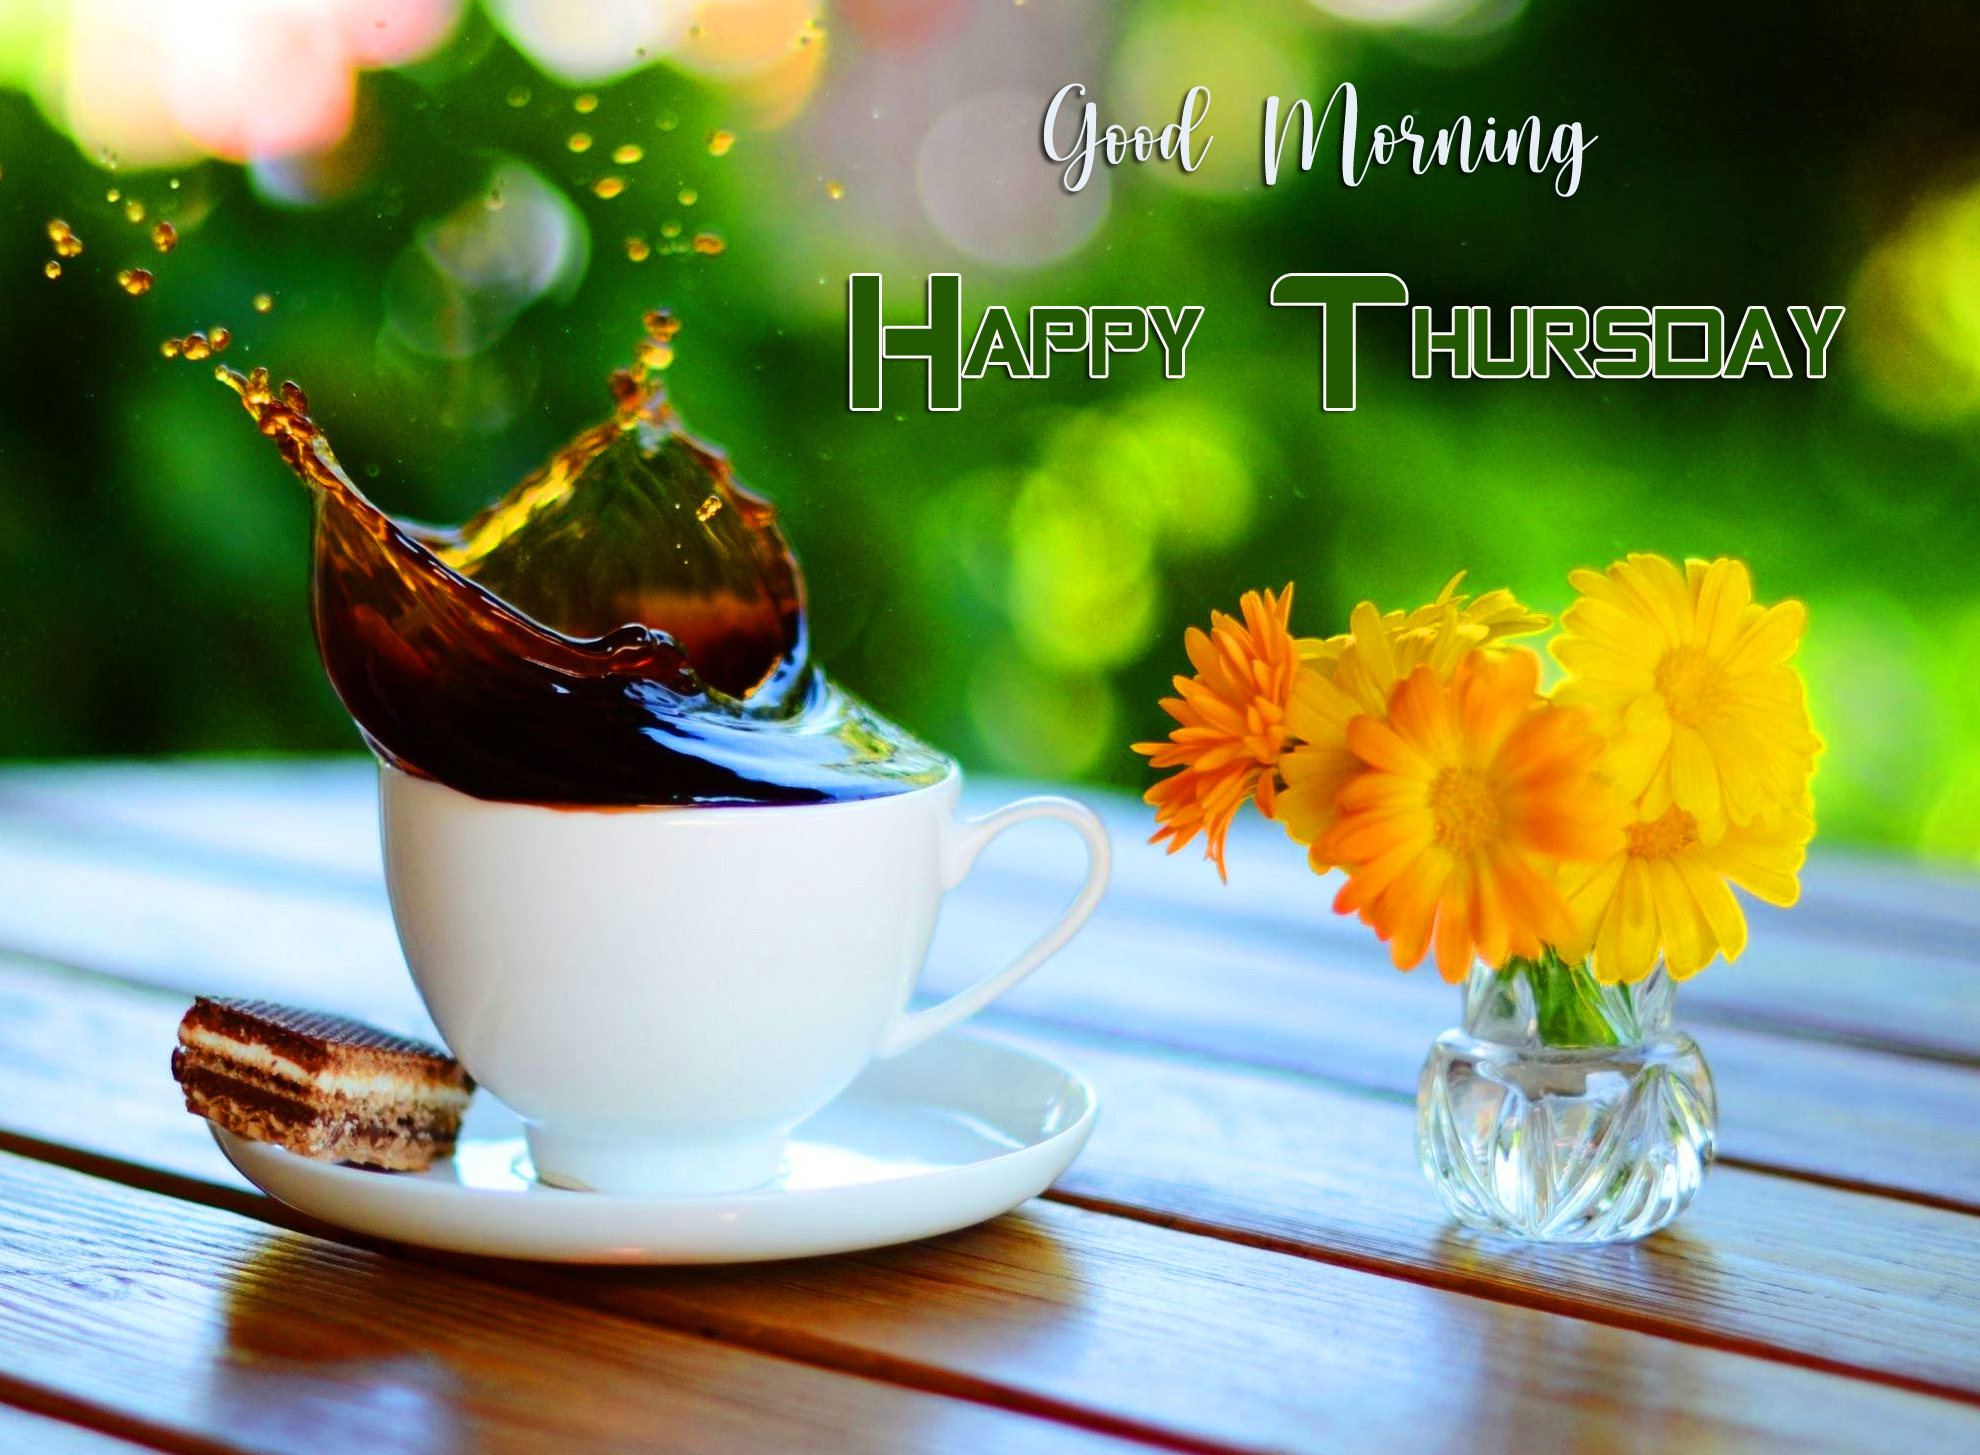 Splashing Coffee with Good Morning Happy Thursday Wish